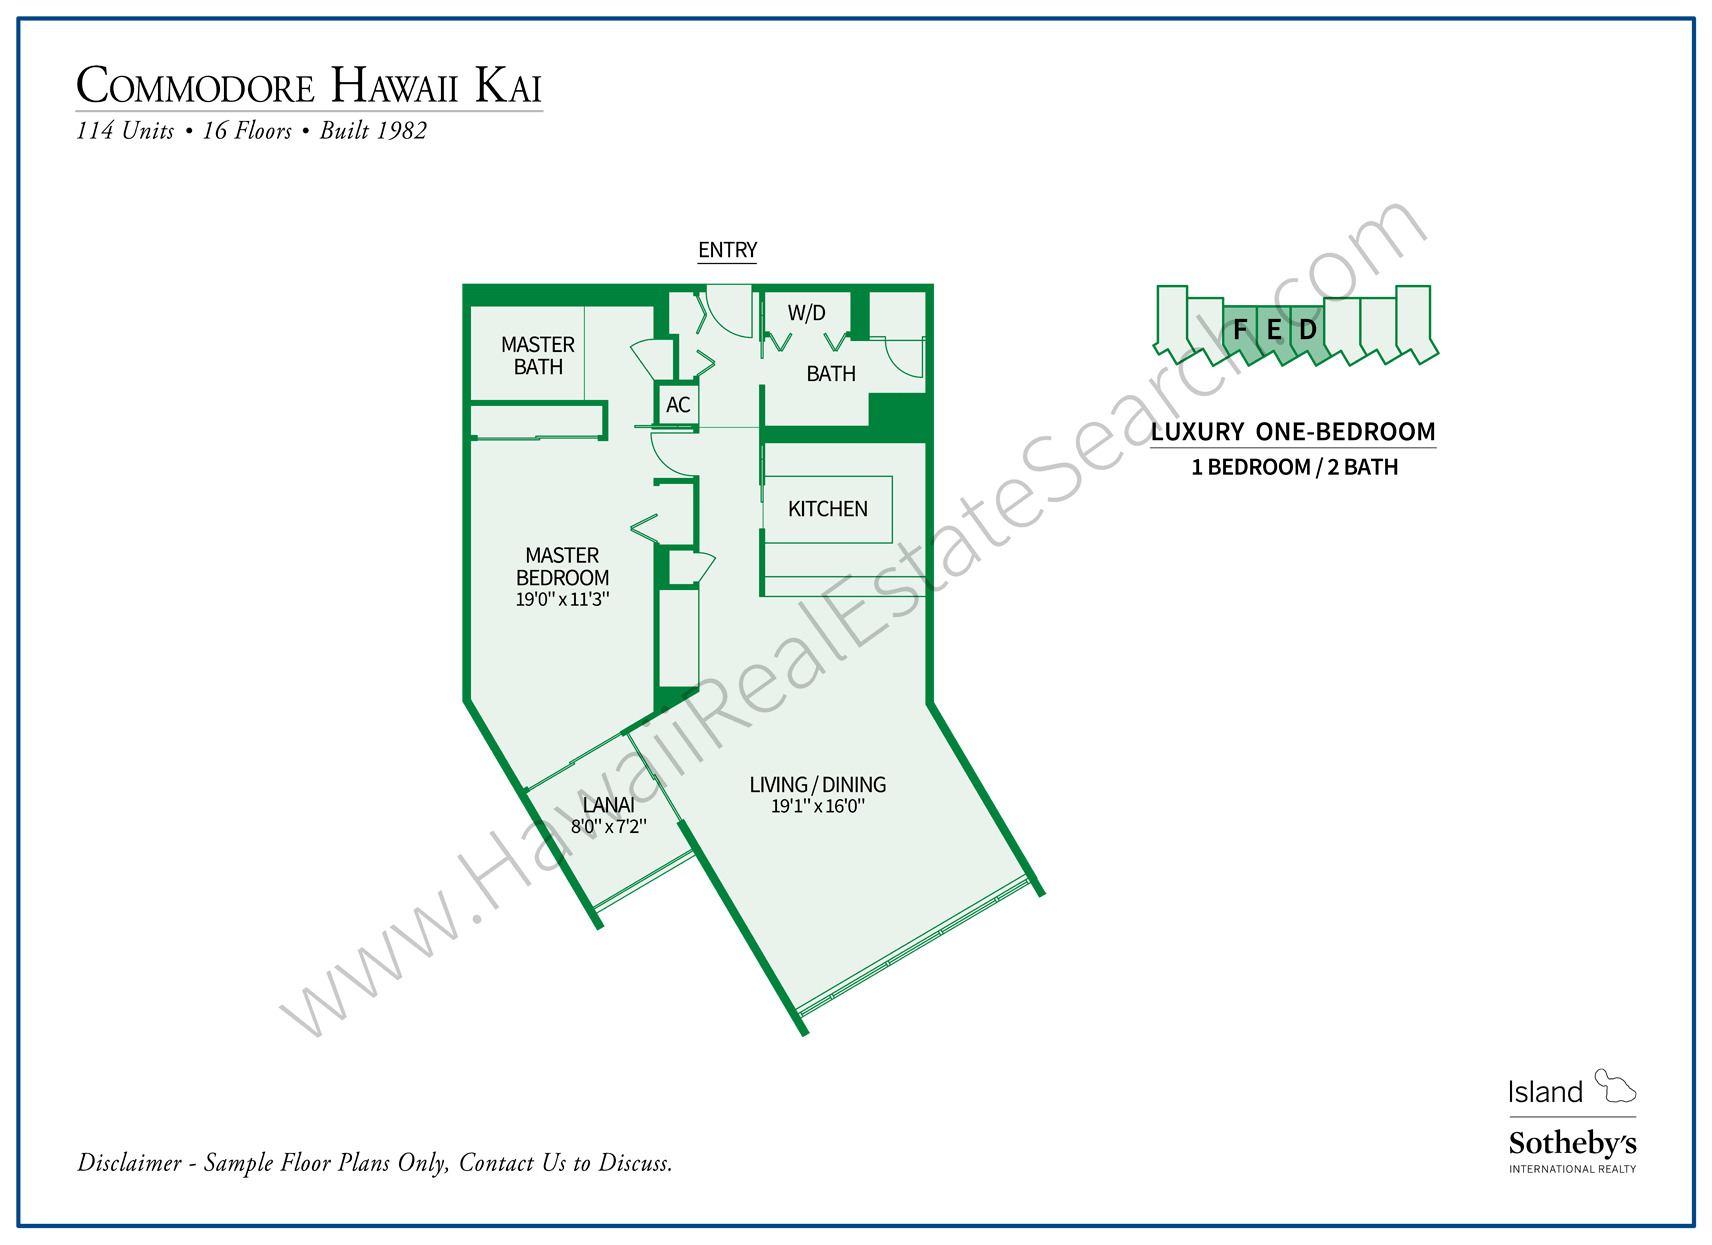 Commodore Hawaii Kai Floor Plan 3